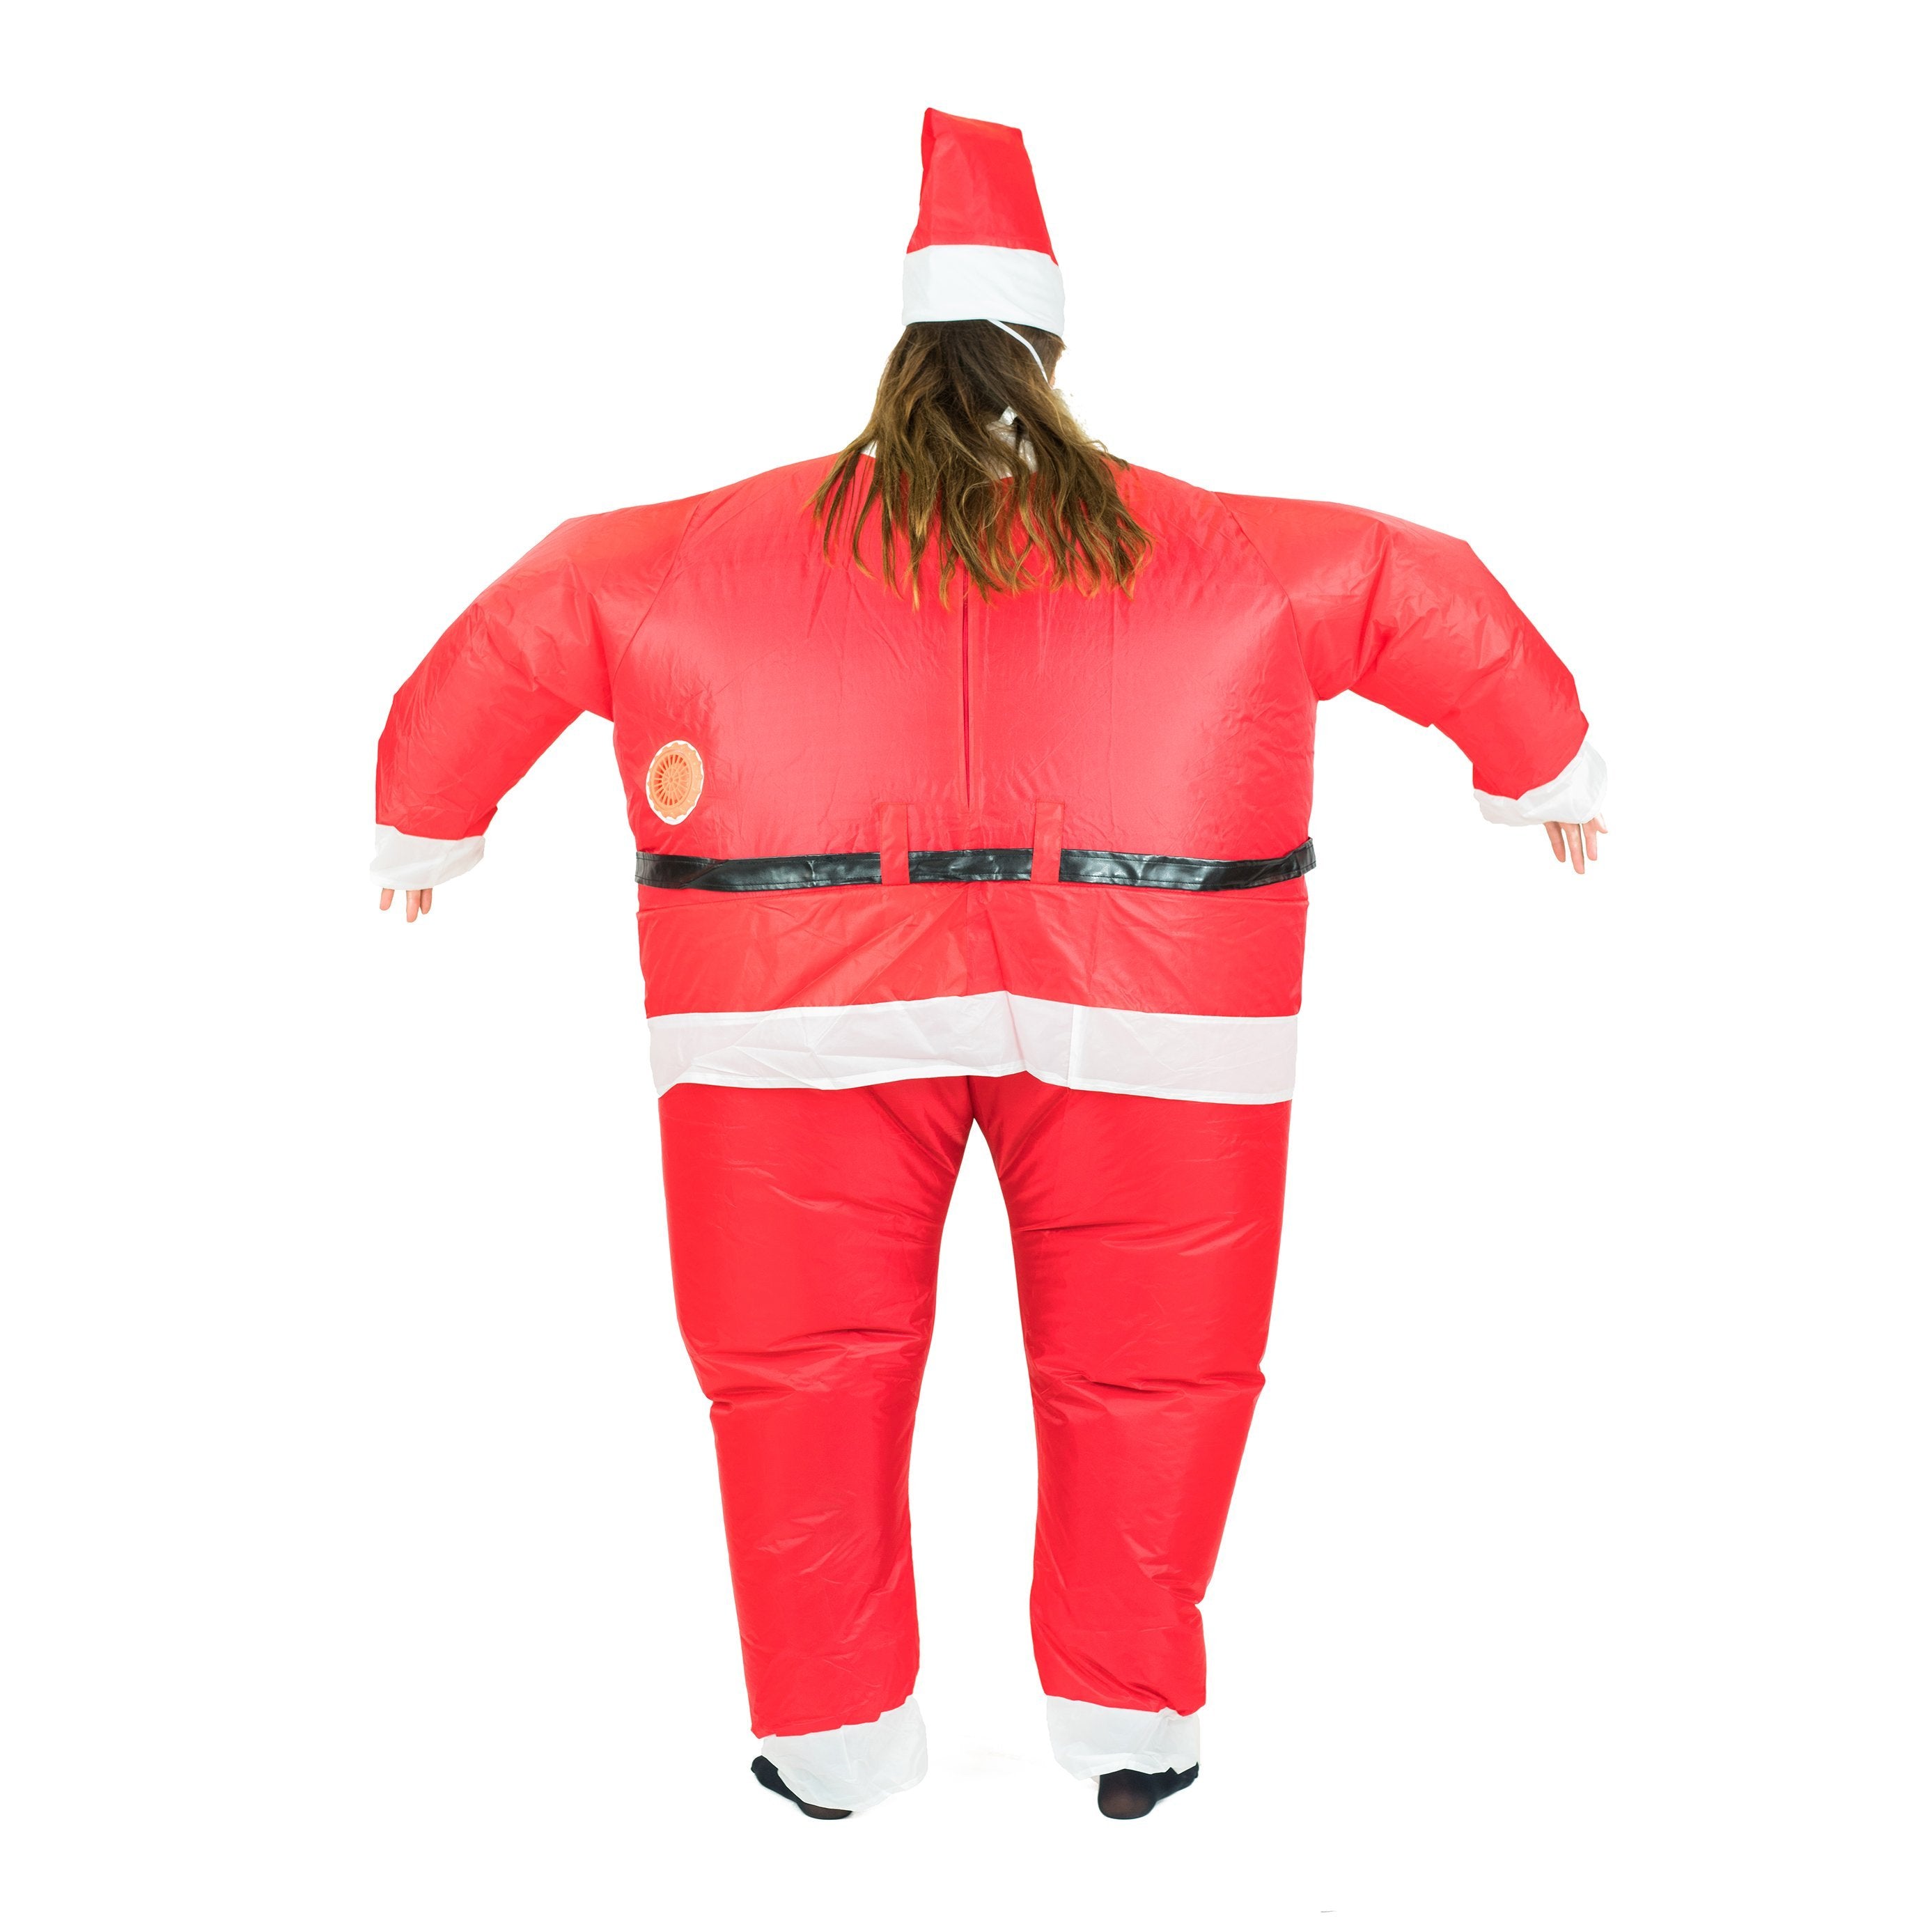 Bodysocks - Inflatable Santa Costume